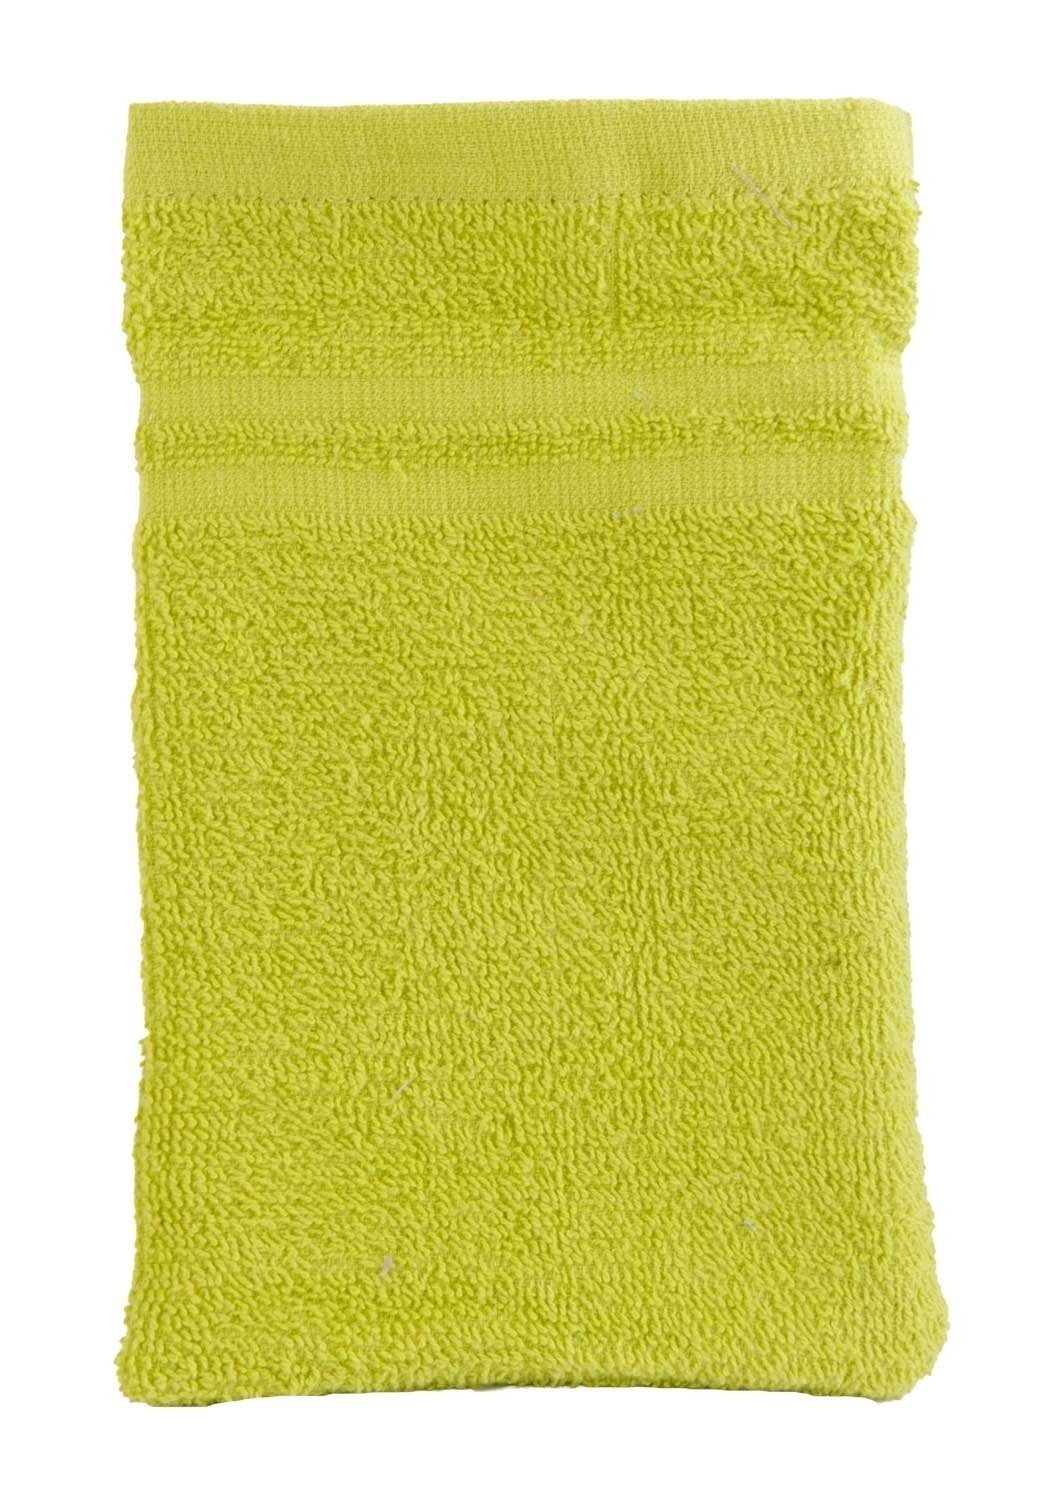 Waschhandschuh Waschhandschuh, Grün, B 15 cm, L 21 cm